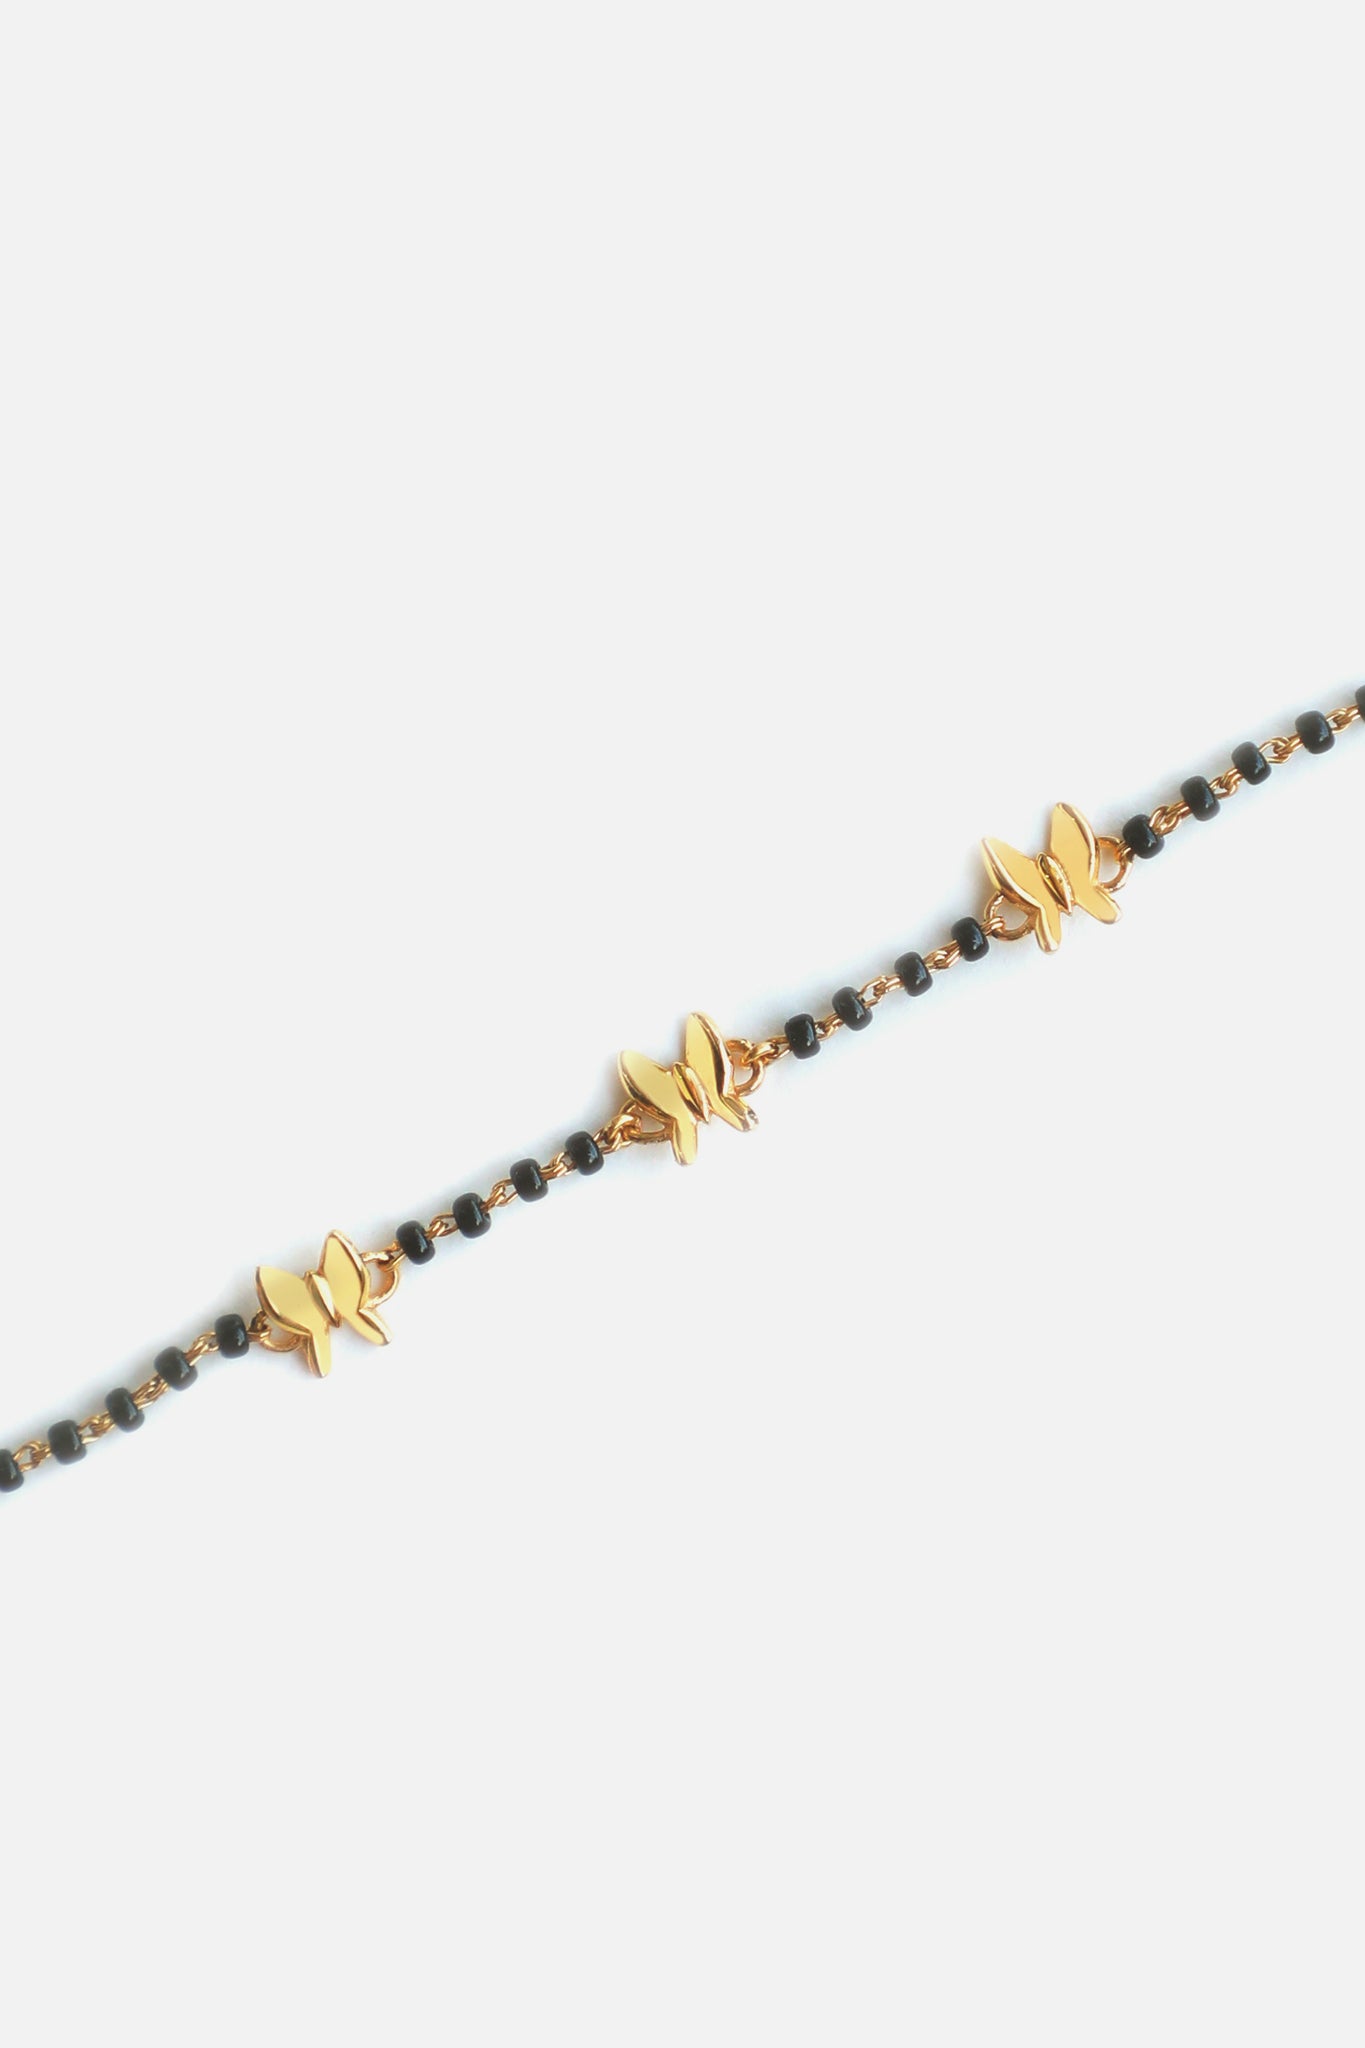 Mangalsutra Gold & Diamond Bracelet Designs With Price✨| Caratlane  Mangalsutra Bracelet In Gold 2022 - YouTube